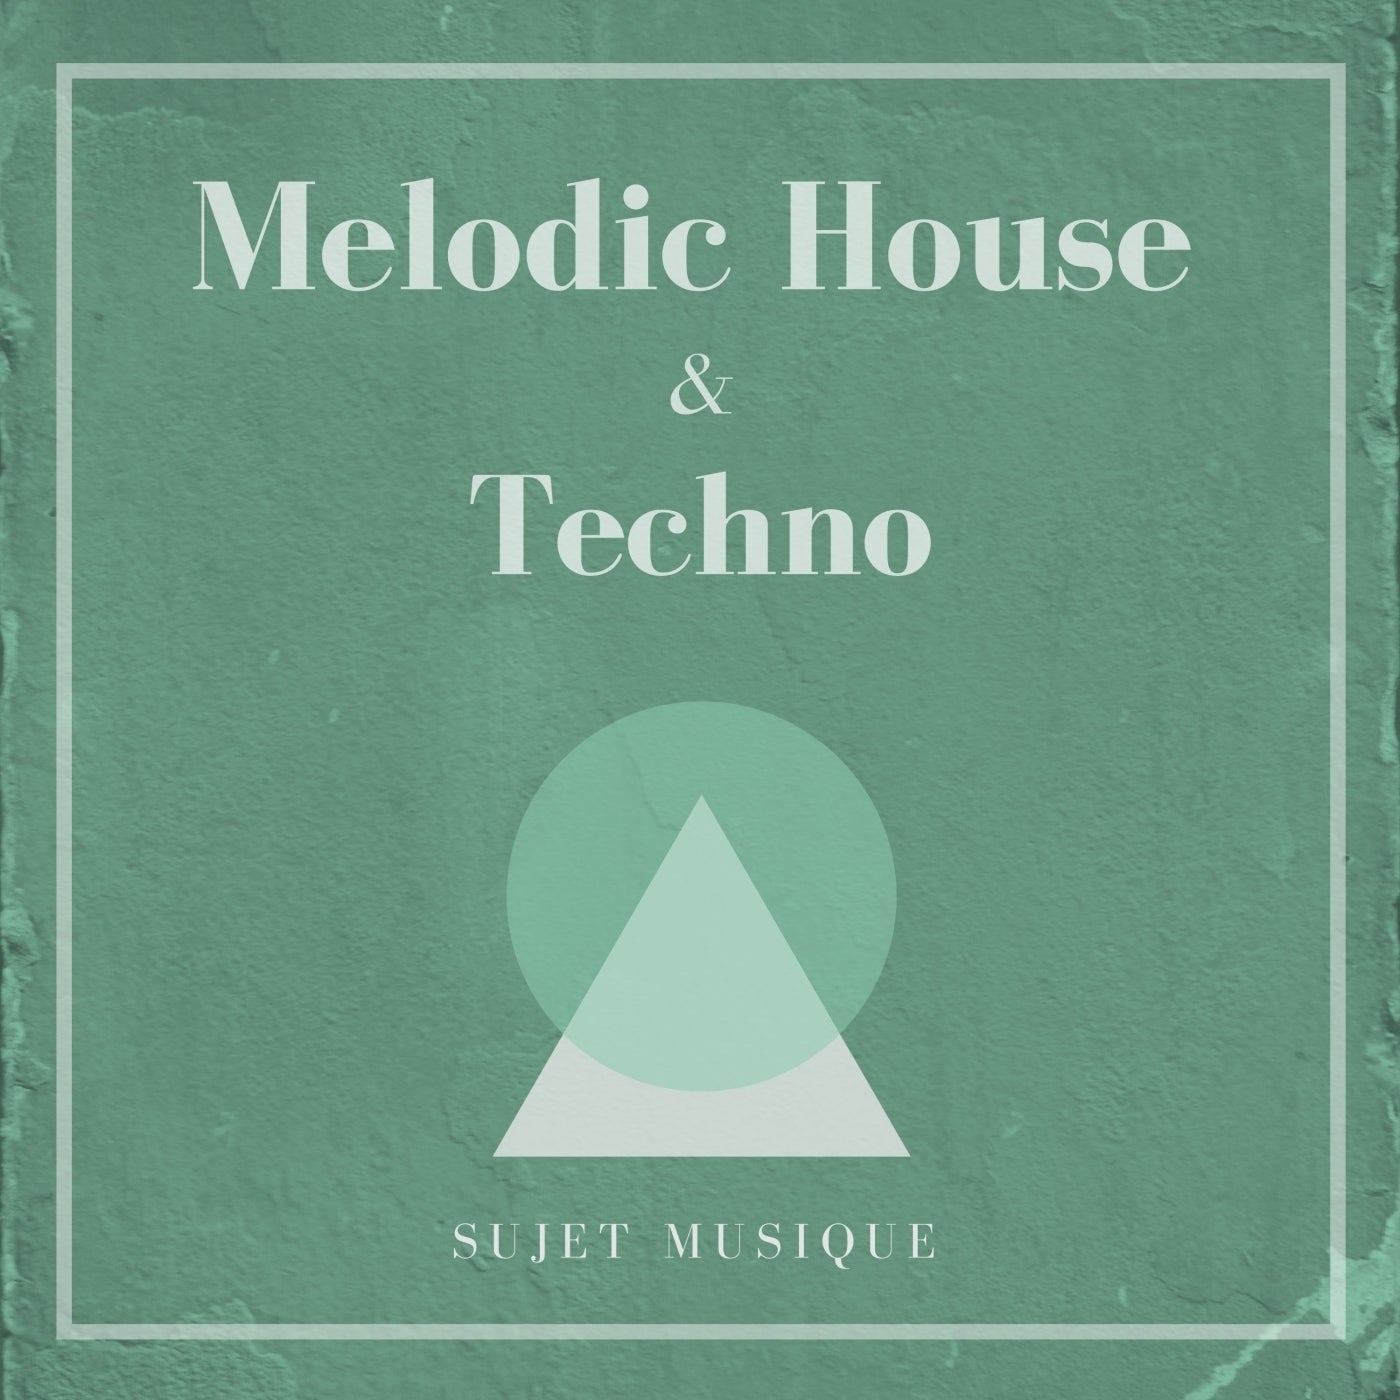 Melodic House & Techno